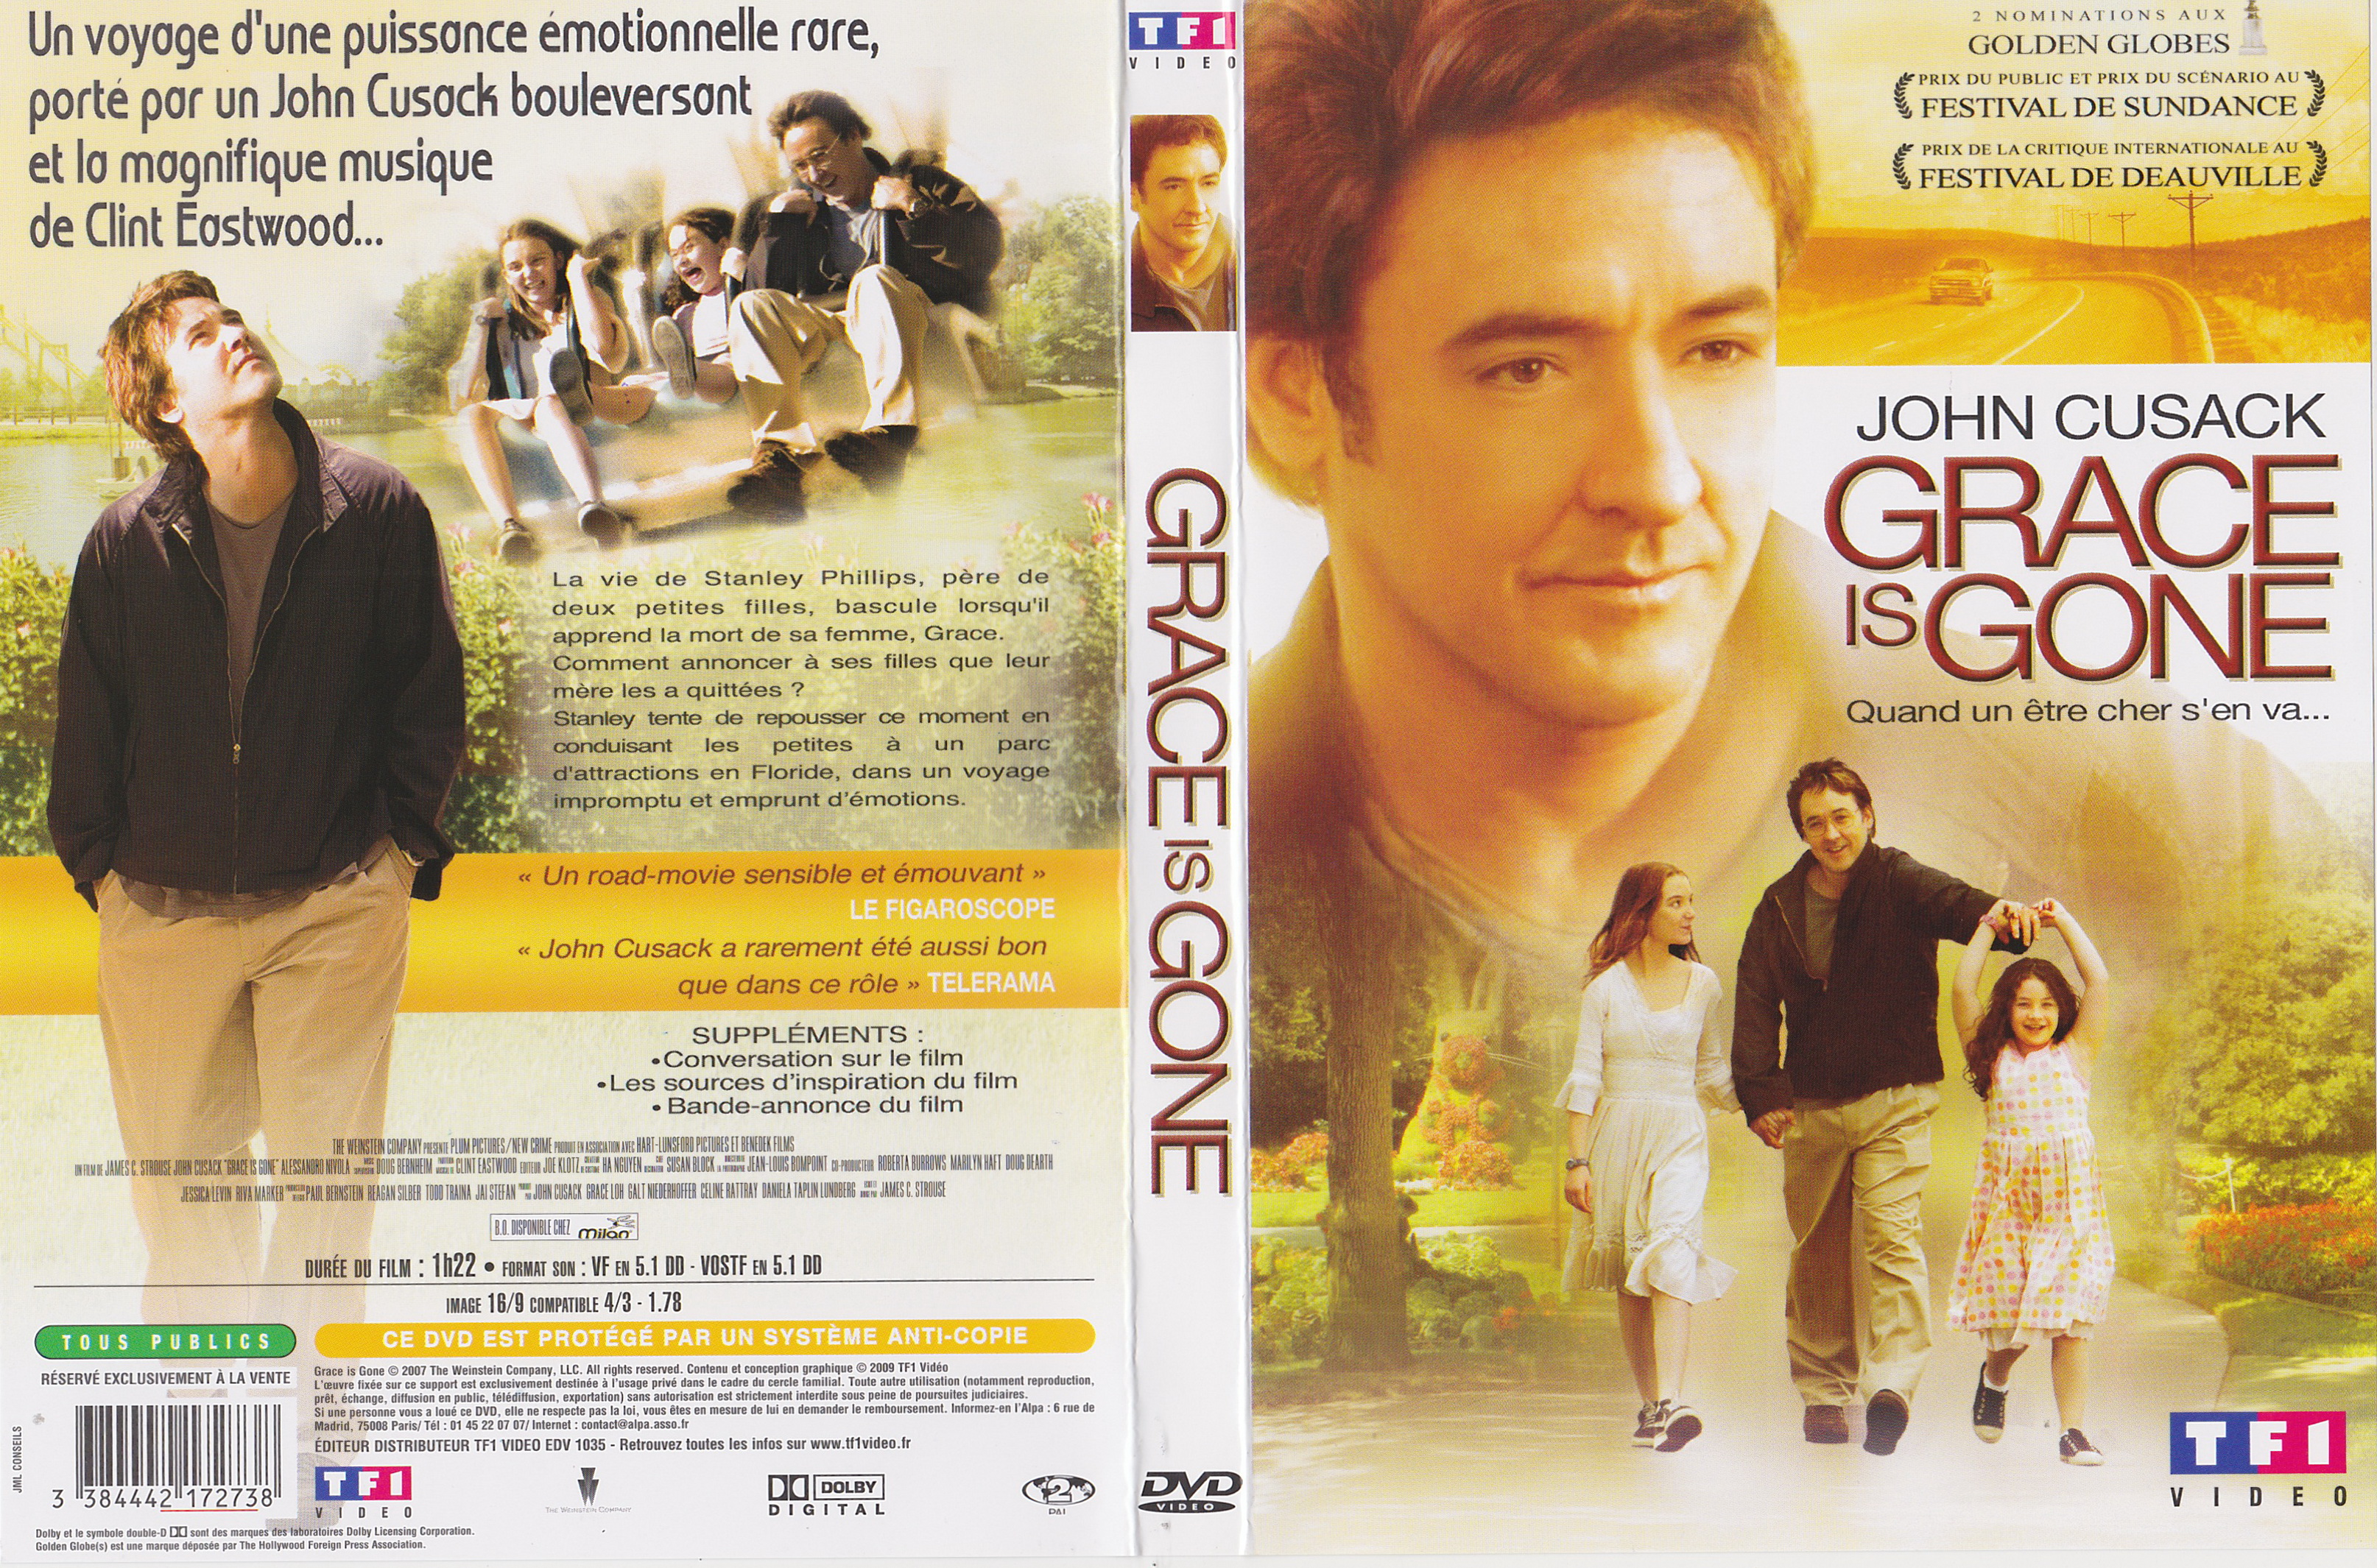 Jaquette DVD Grace is gone